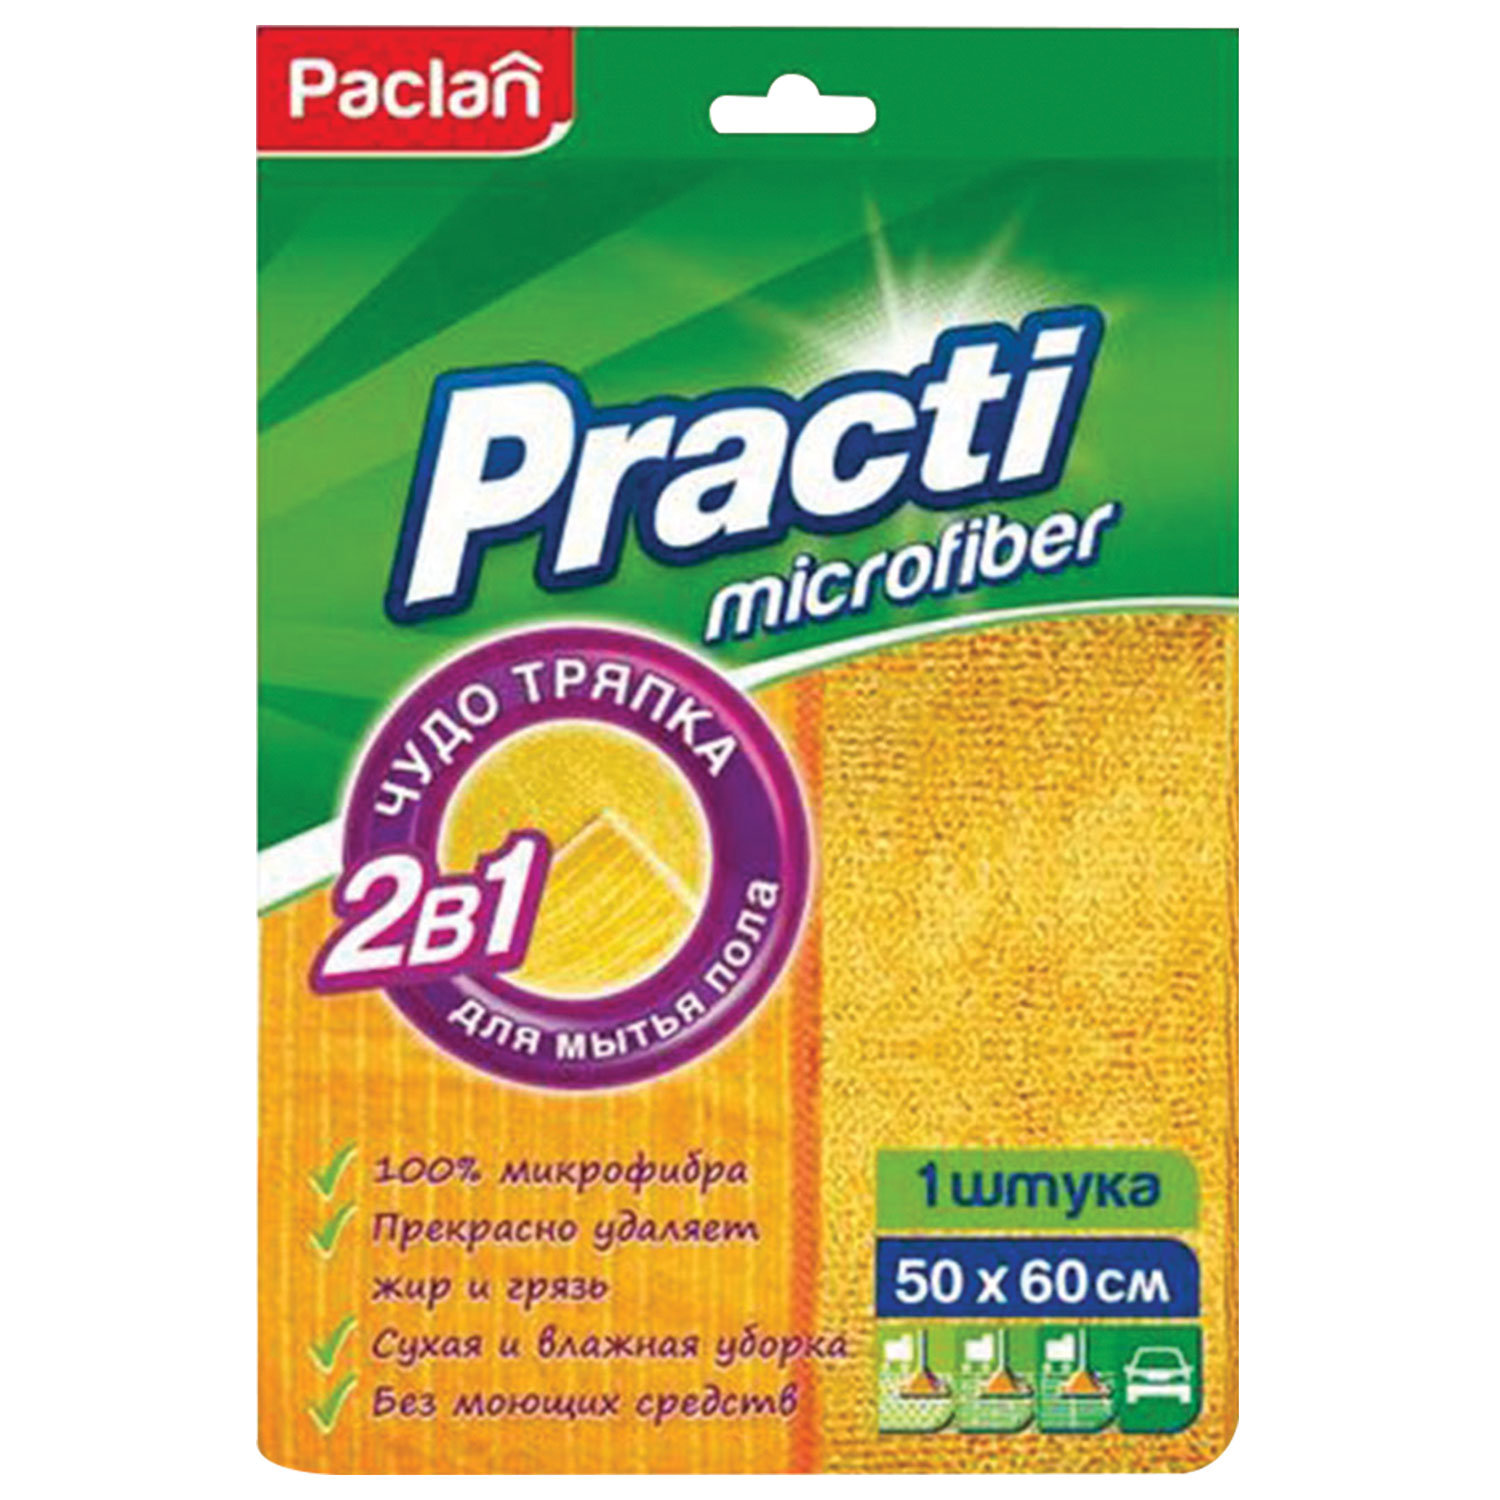 Paclan Practi тряпка для мытья полов 50х60 см, 1 шт